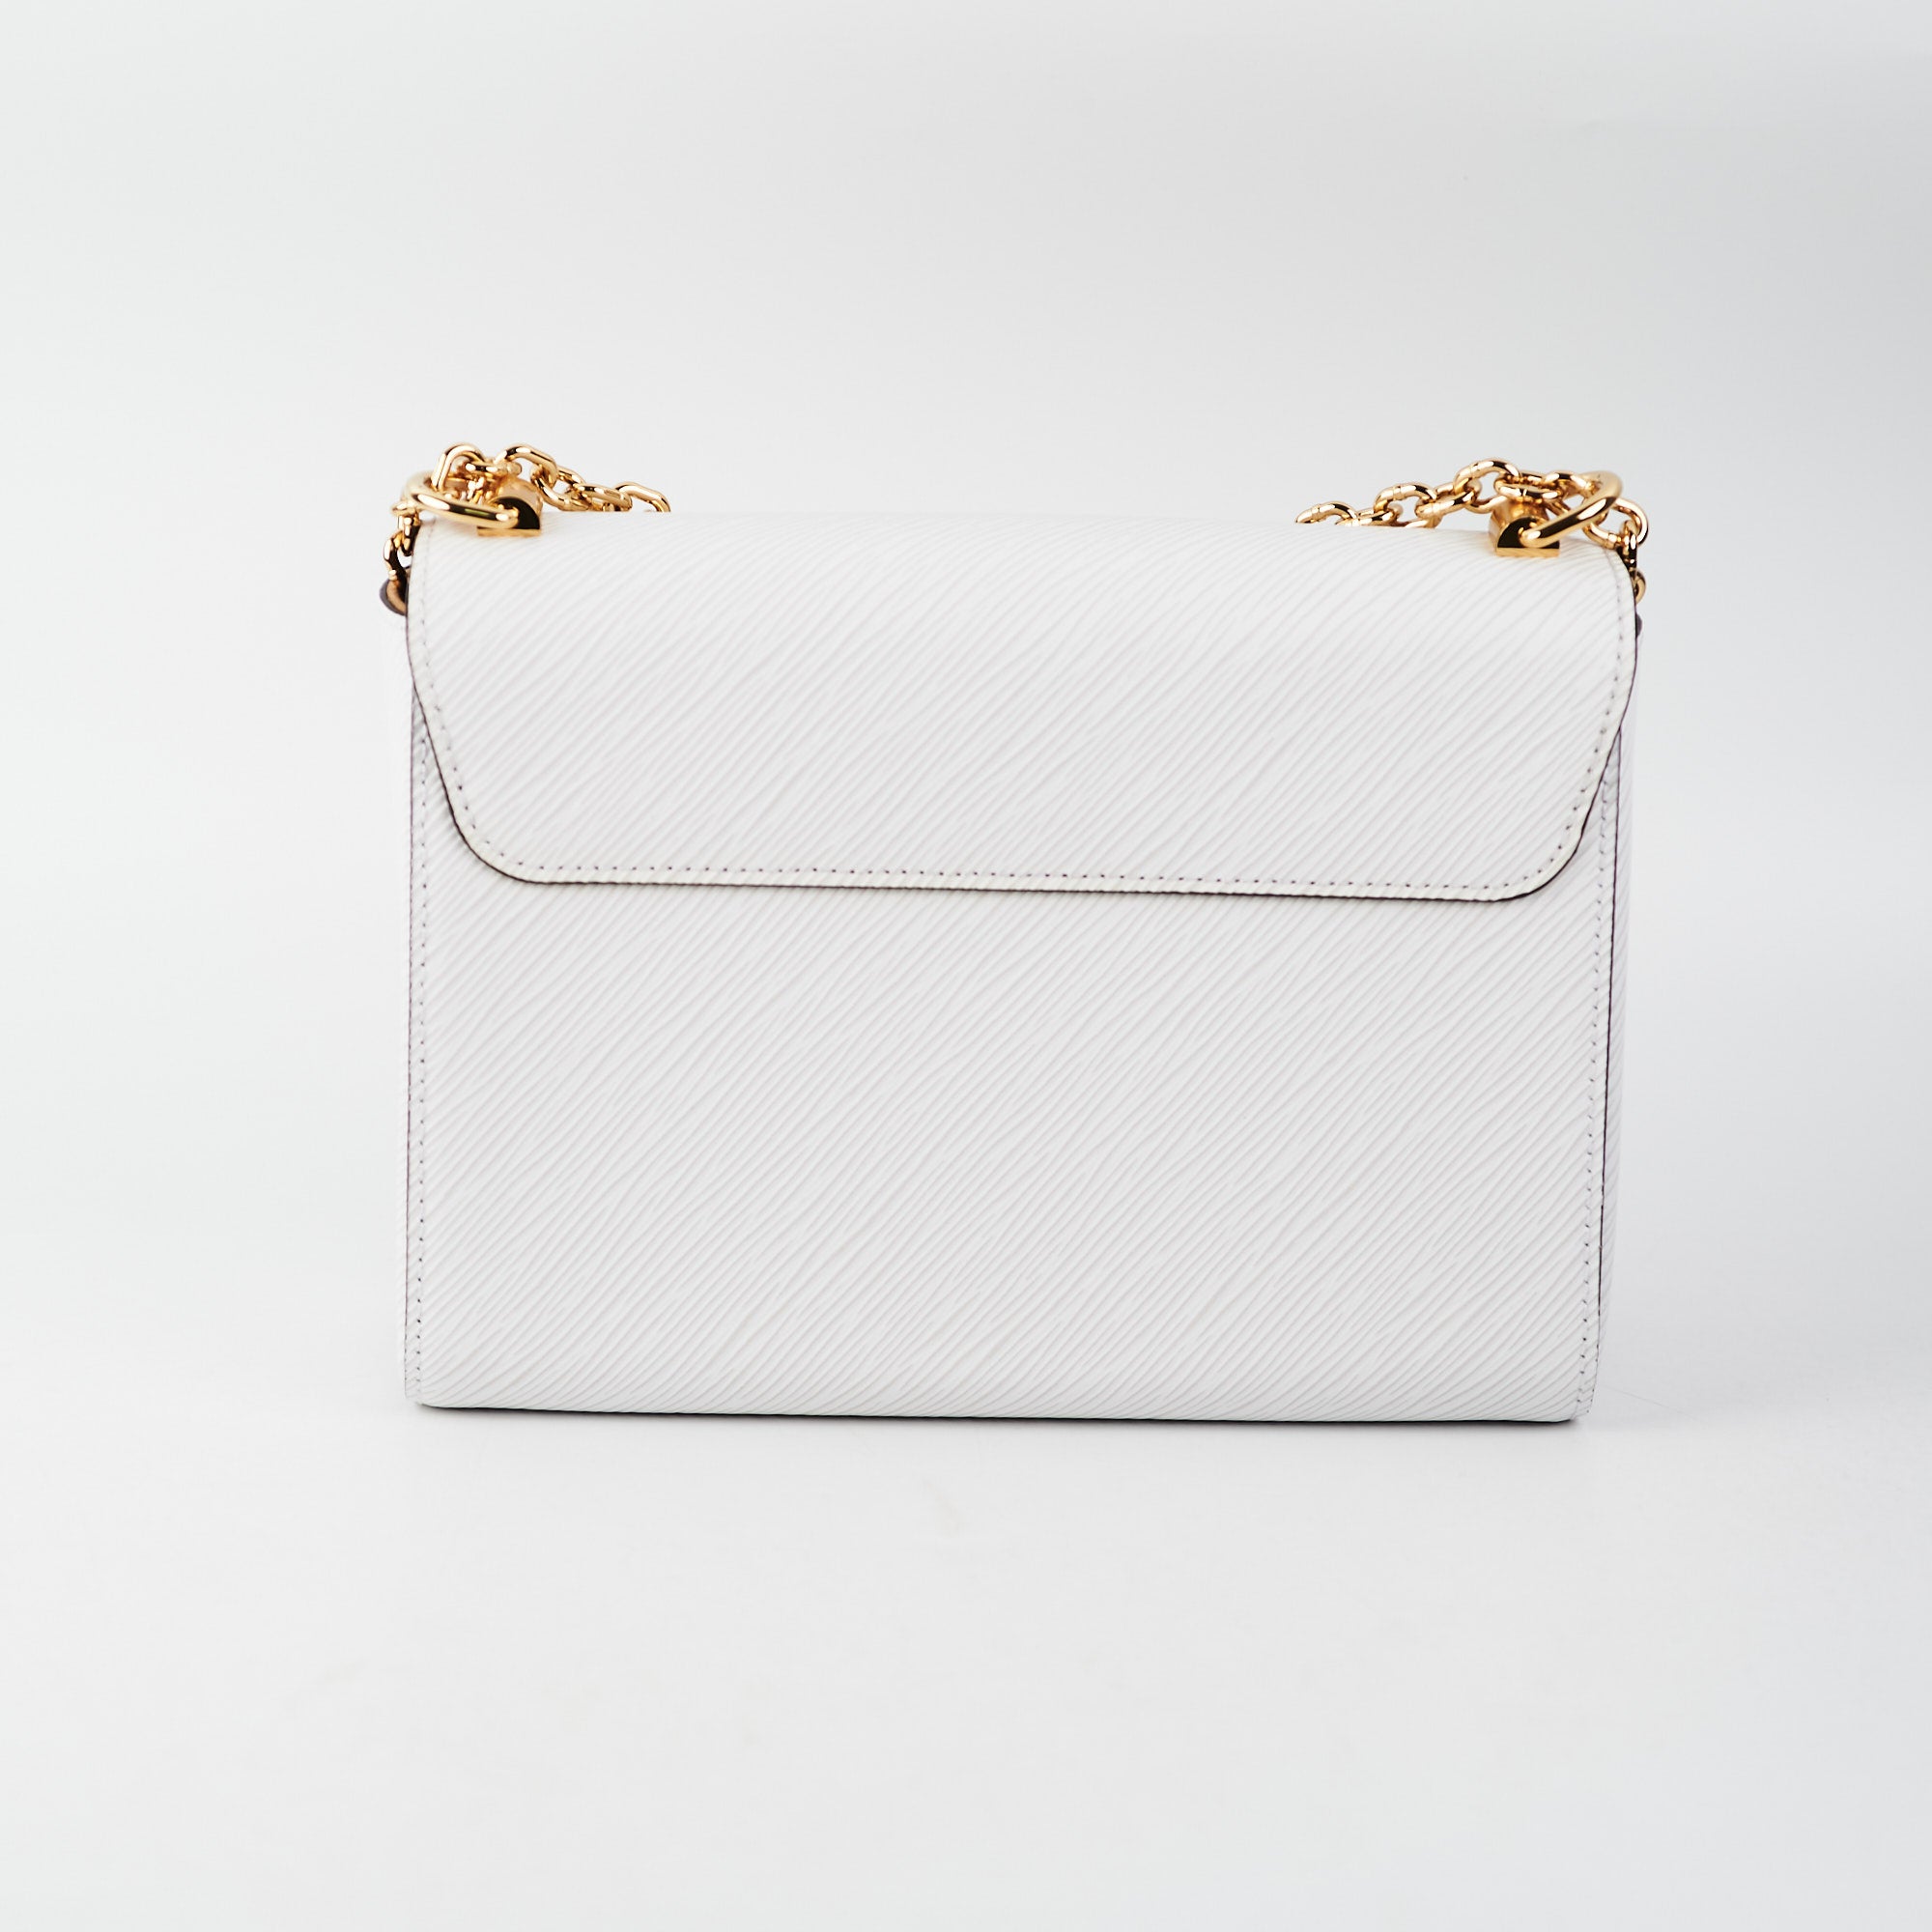 Louis Vuitton Limited Edition Bubbles Twist MM Chain Bag in Epi Blanc - SOLD